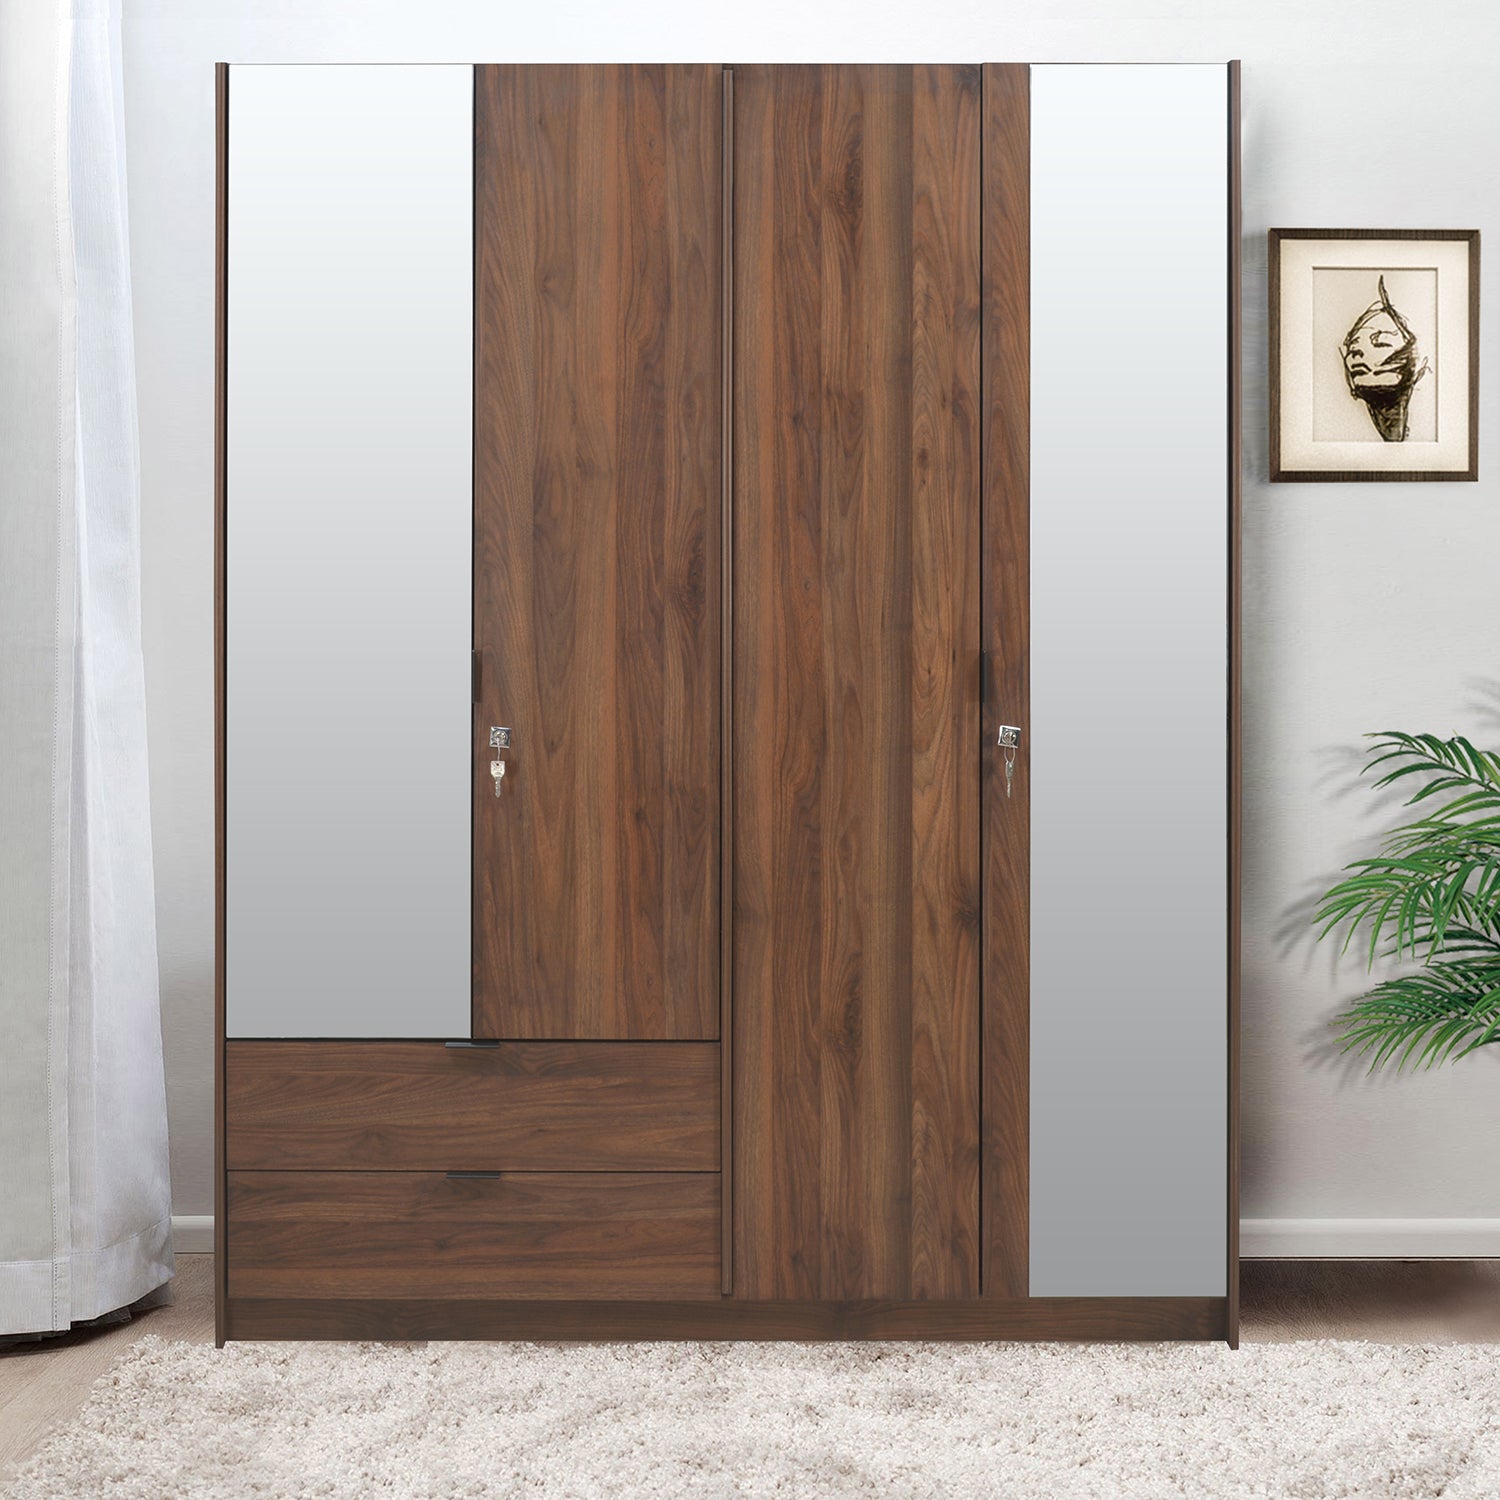 Avery 4 Door Engineered Wood Wardrobe with Mirror (Wenge)